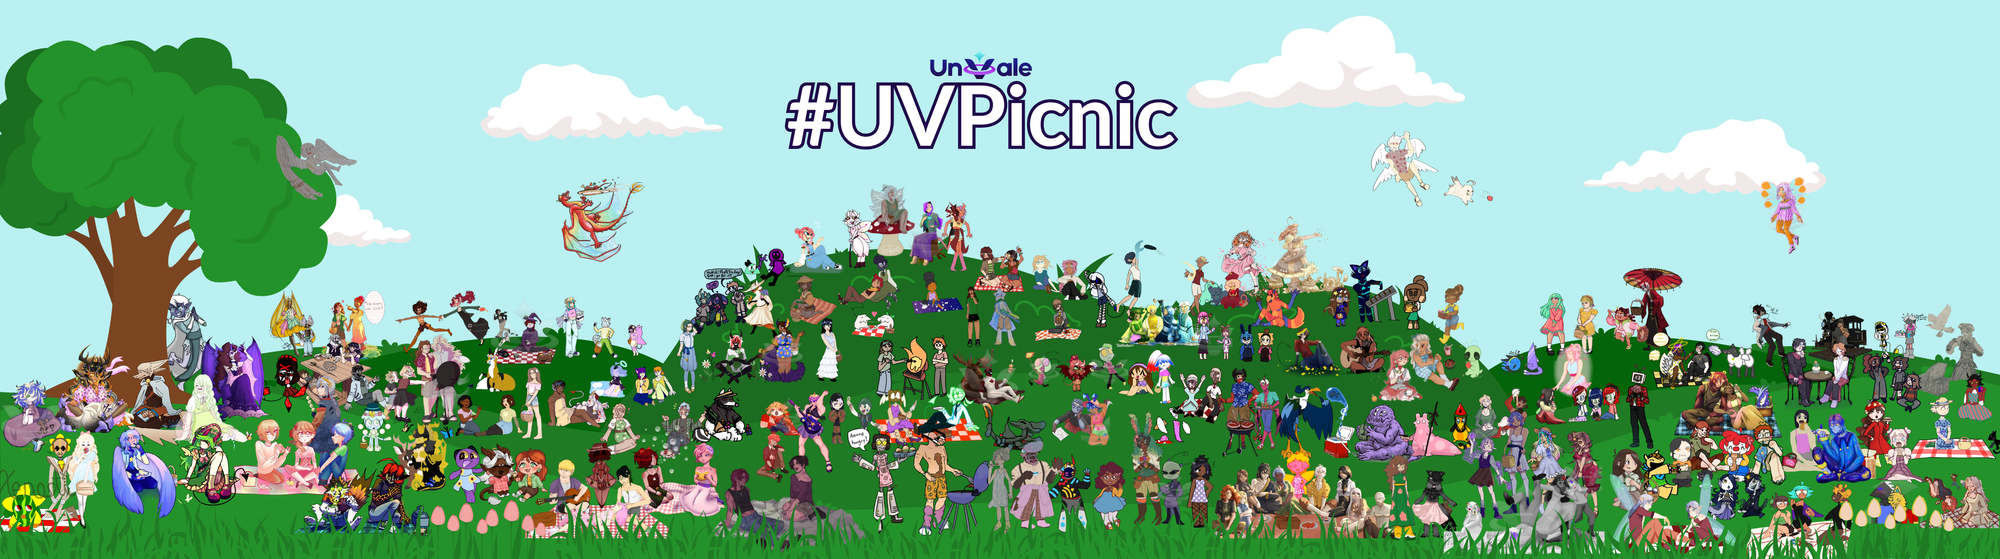 UVPicnic Collaborative Image Reveal! 🧺💐